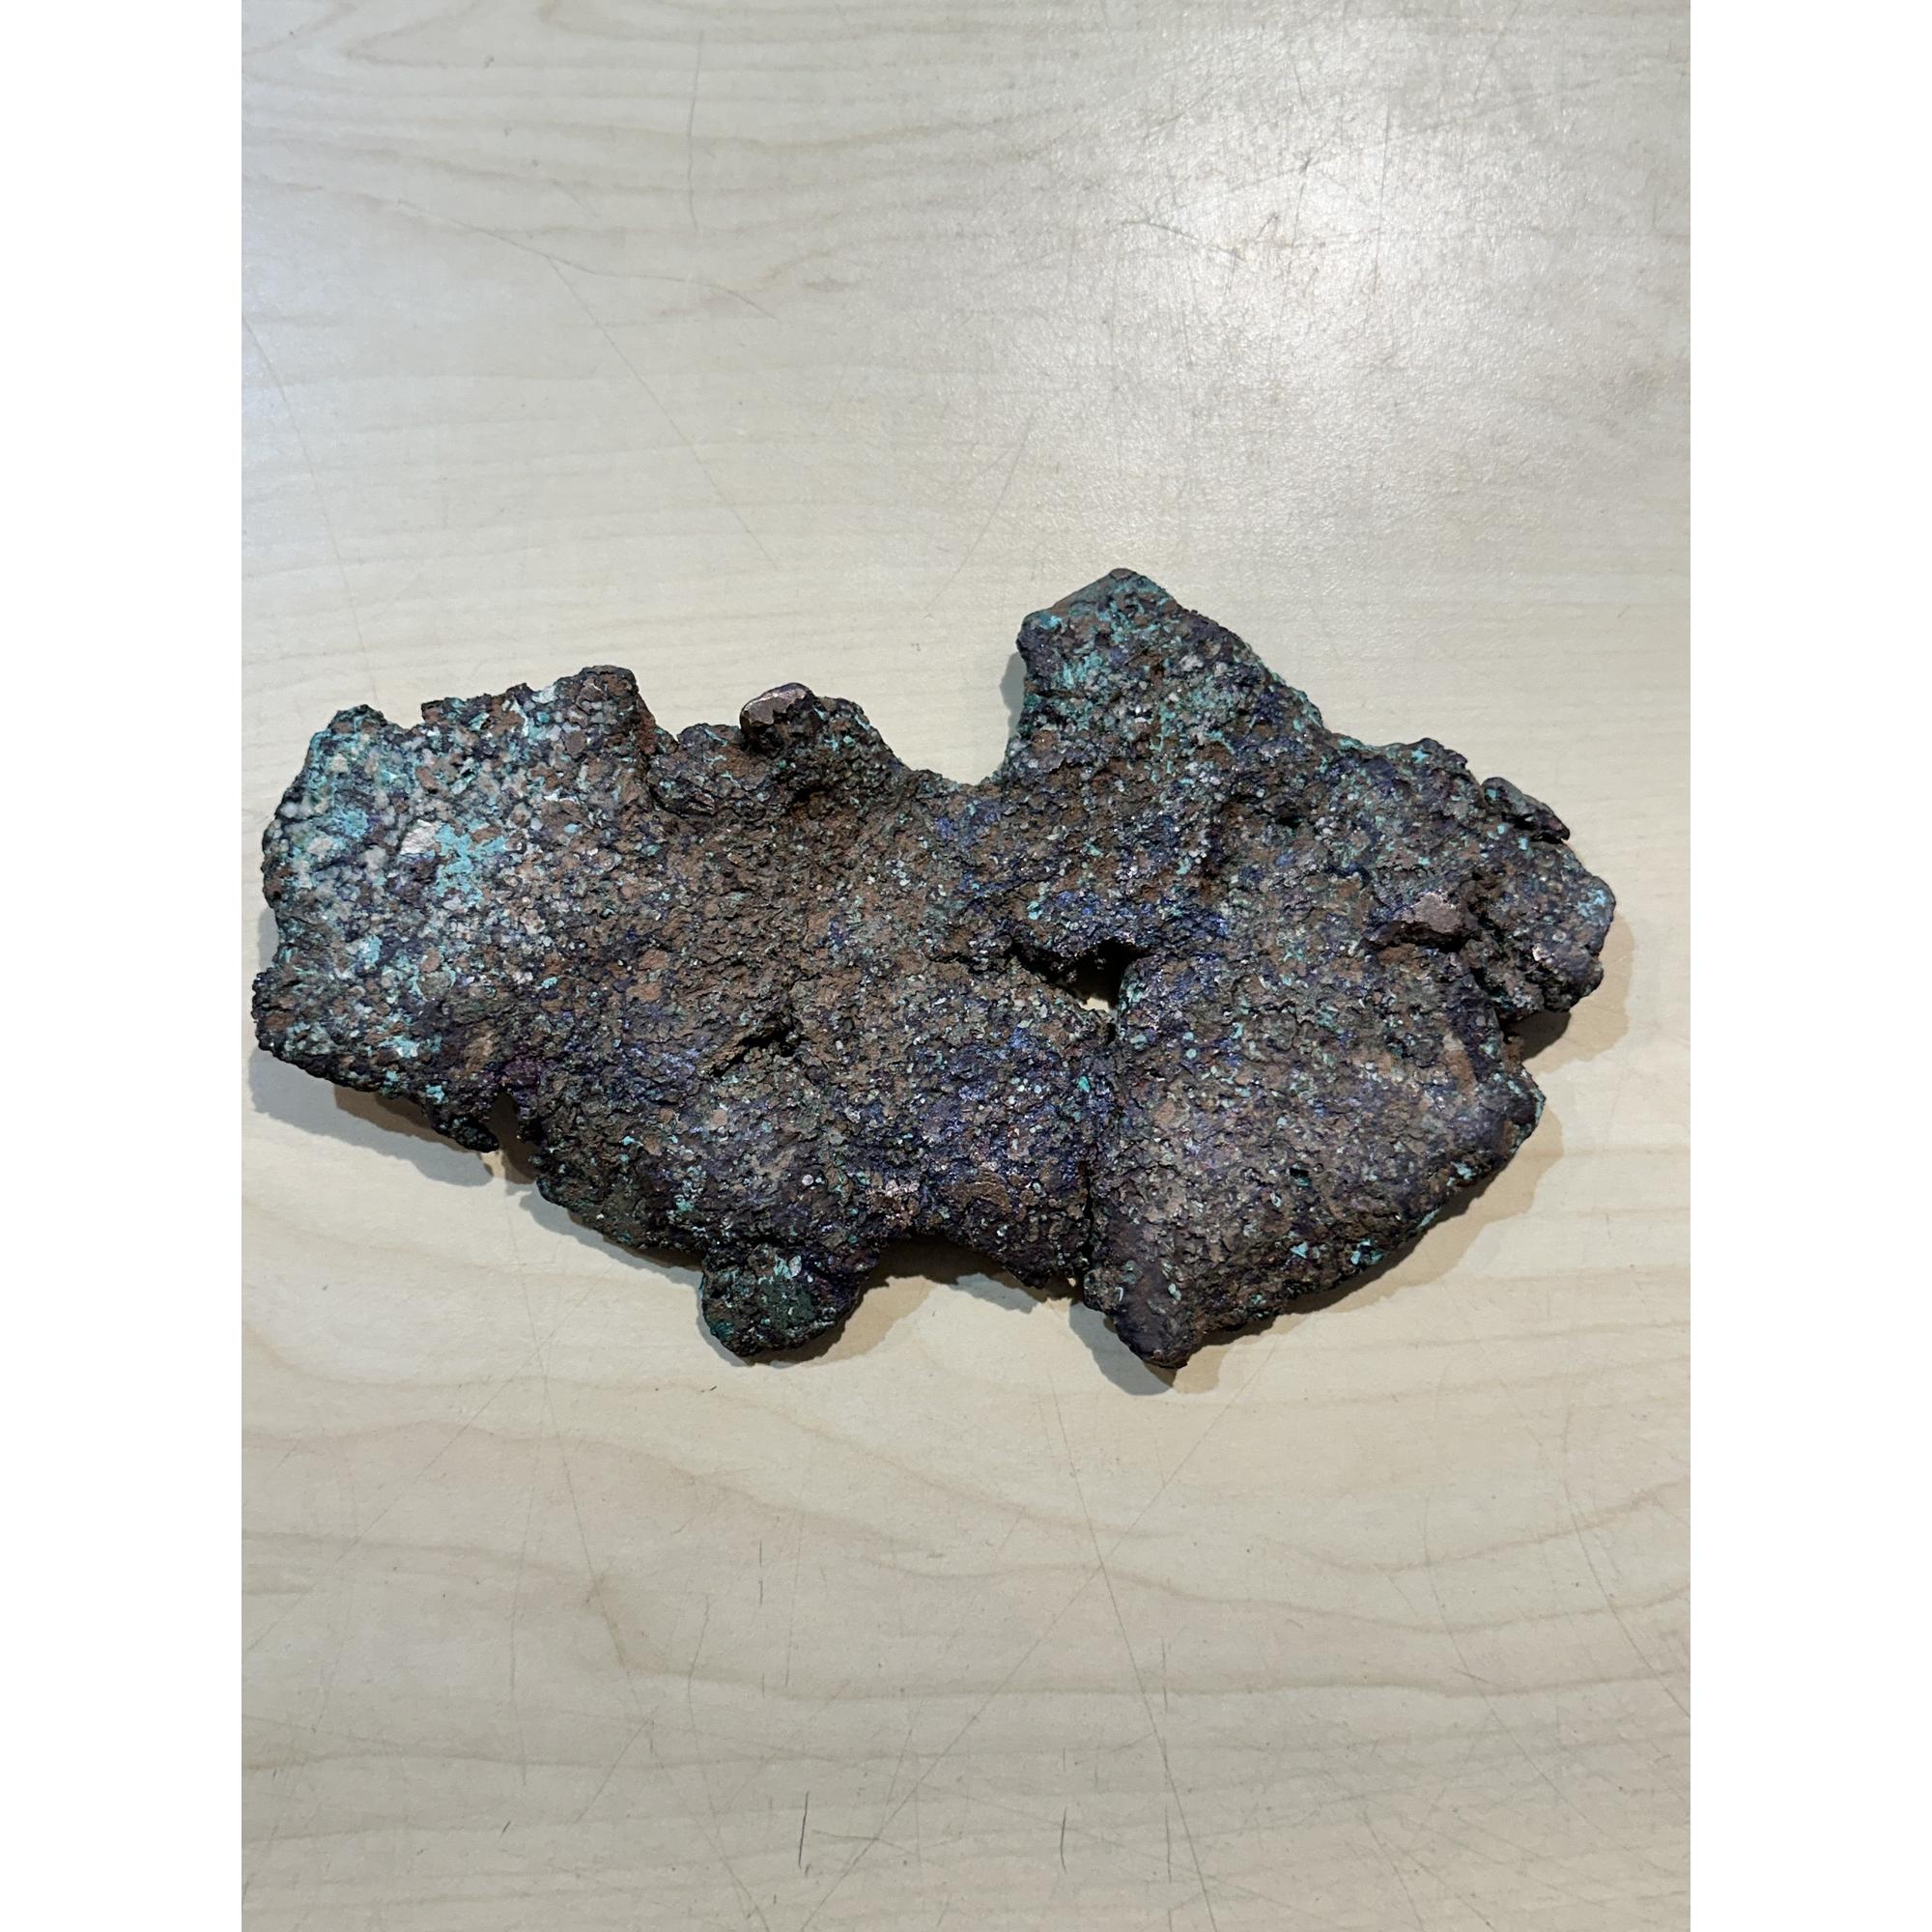 Copper, Glacial Float, Michigan, Near 2 pound Prehistoric Online